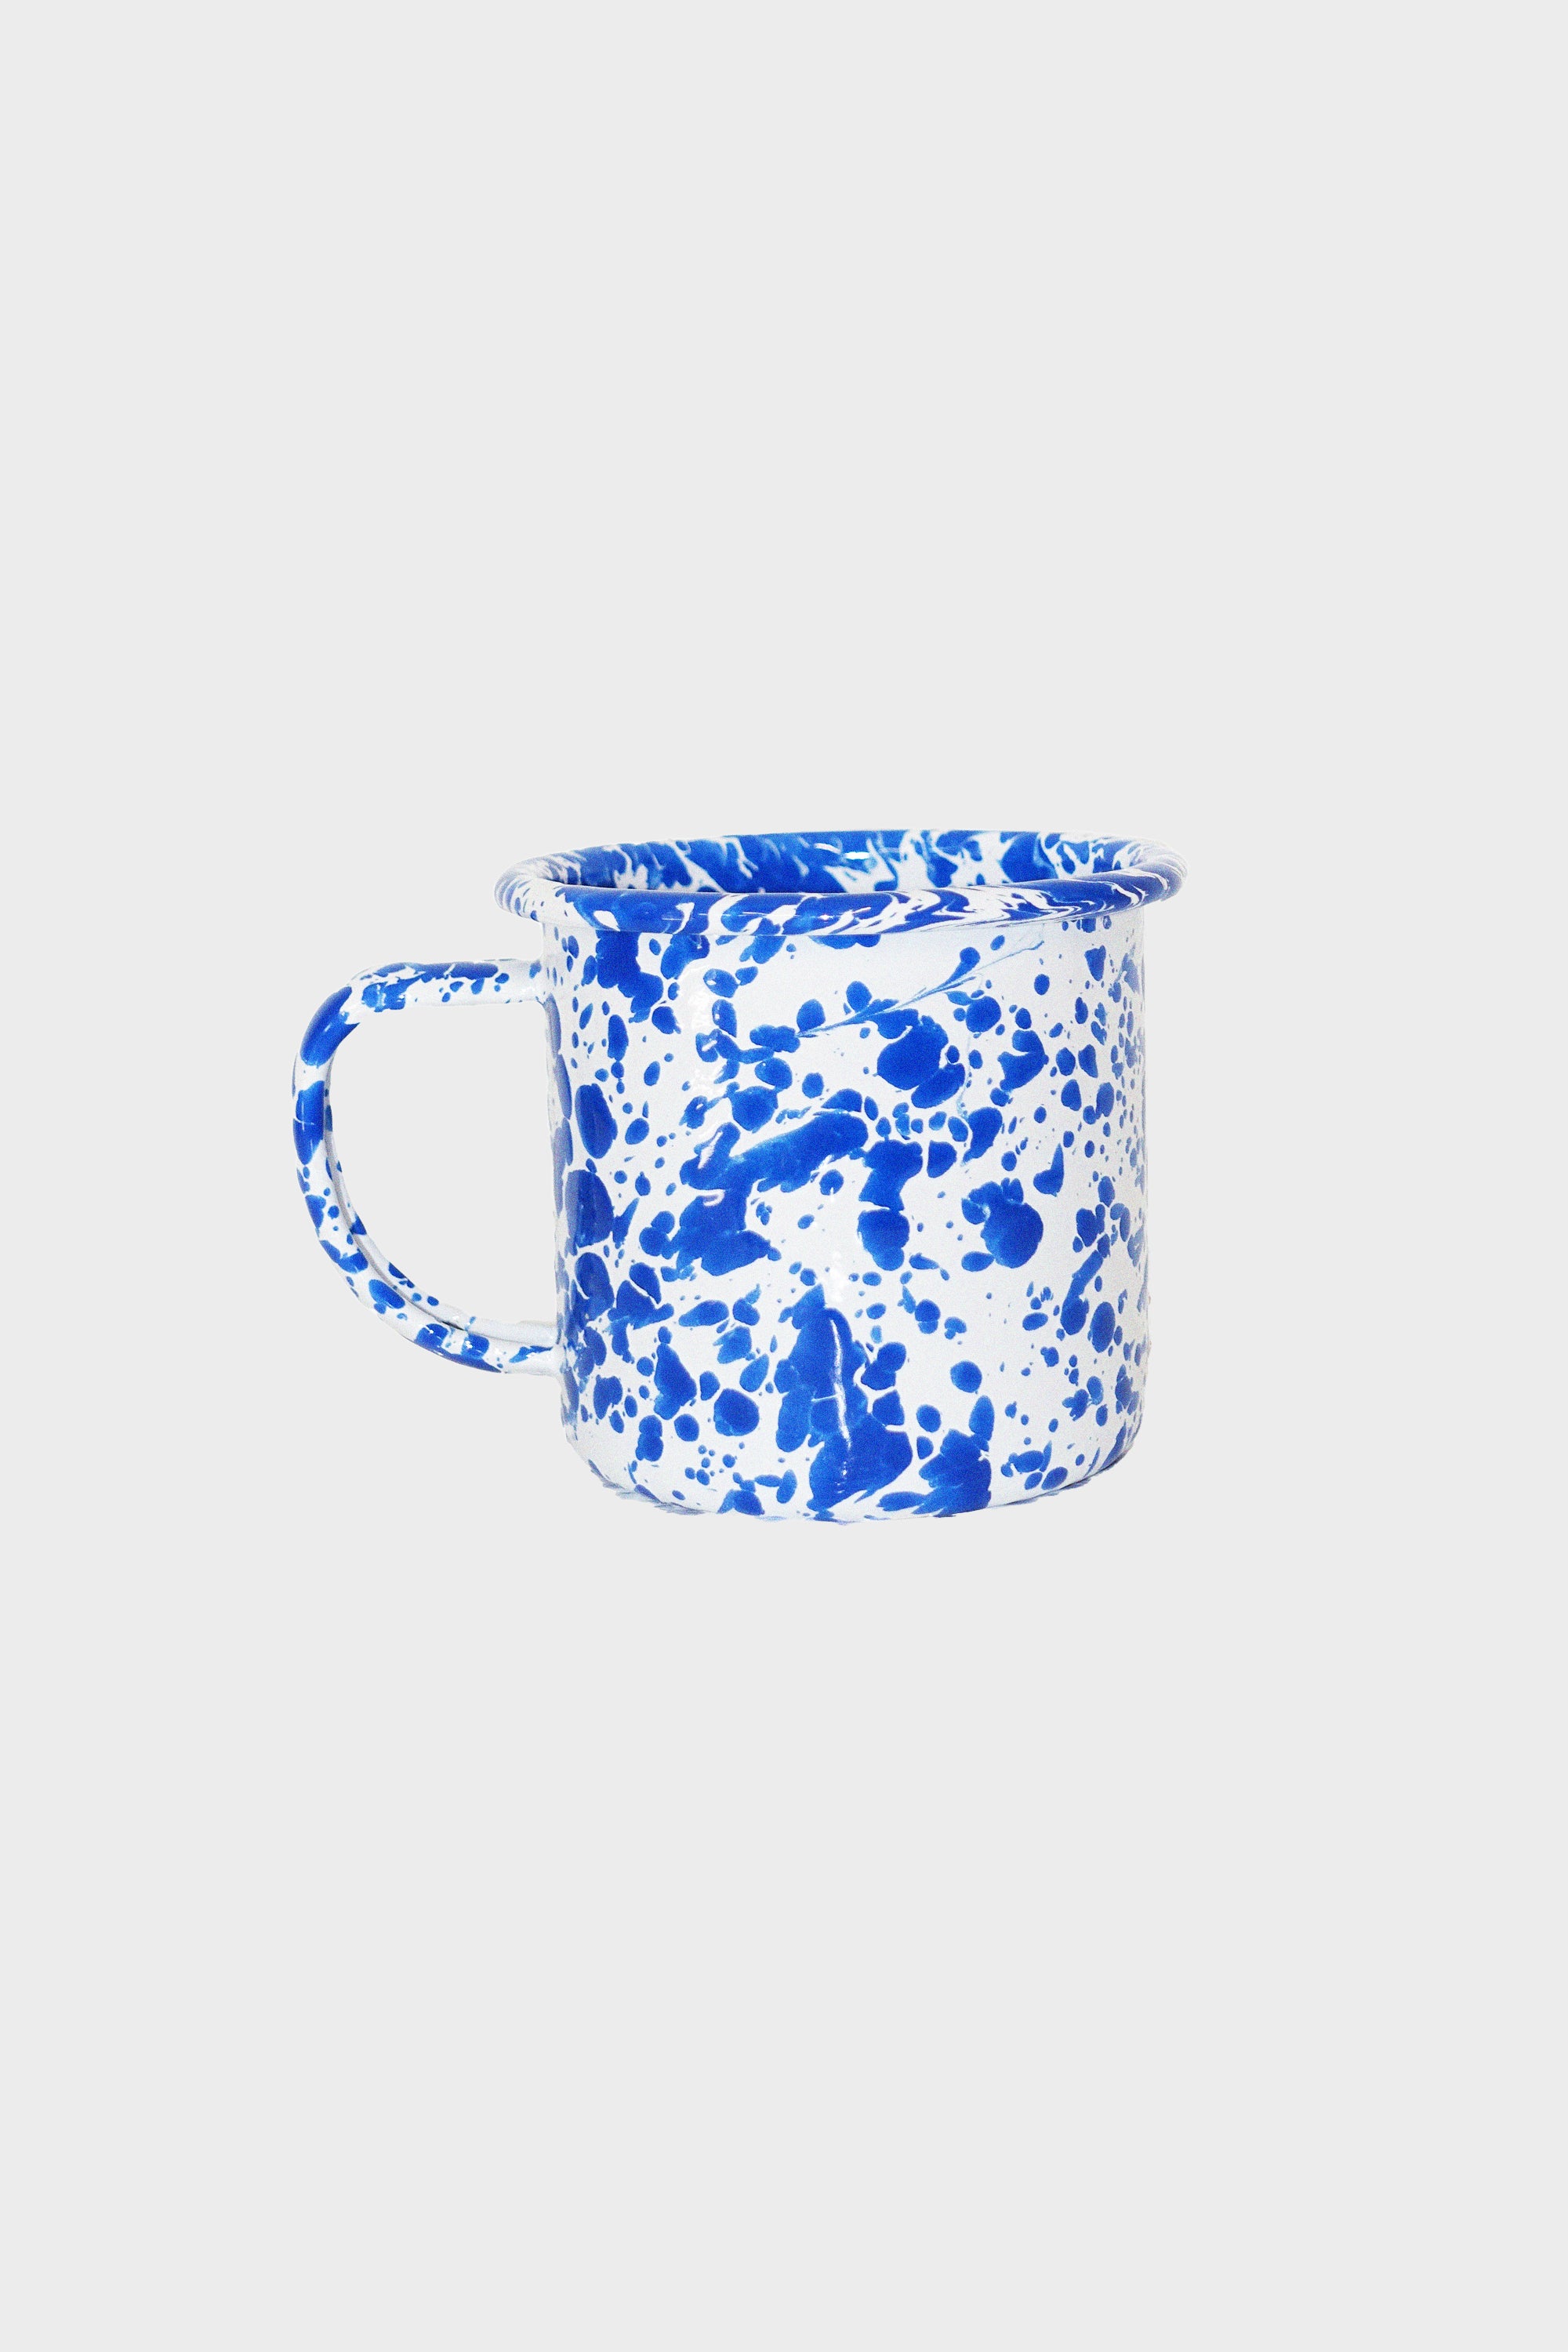 12oz Mug in Blue Splatter Enamelware by Crow Canyon Home